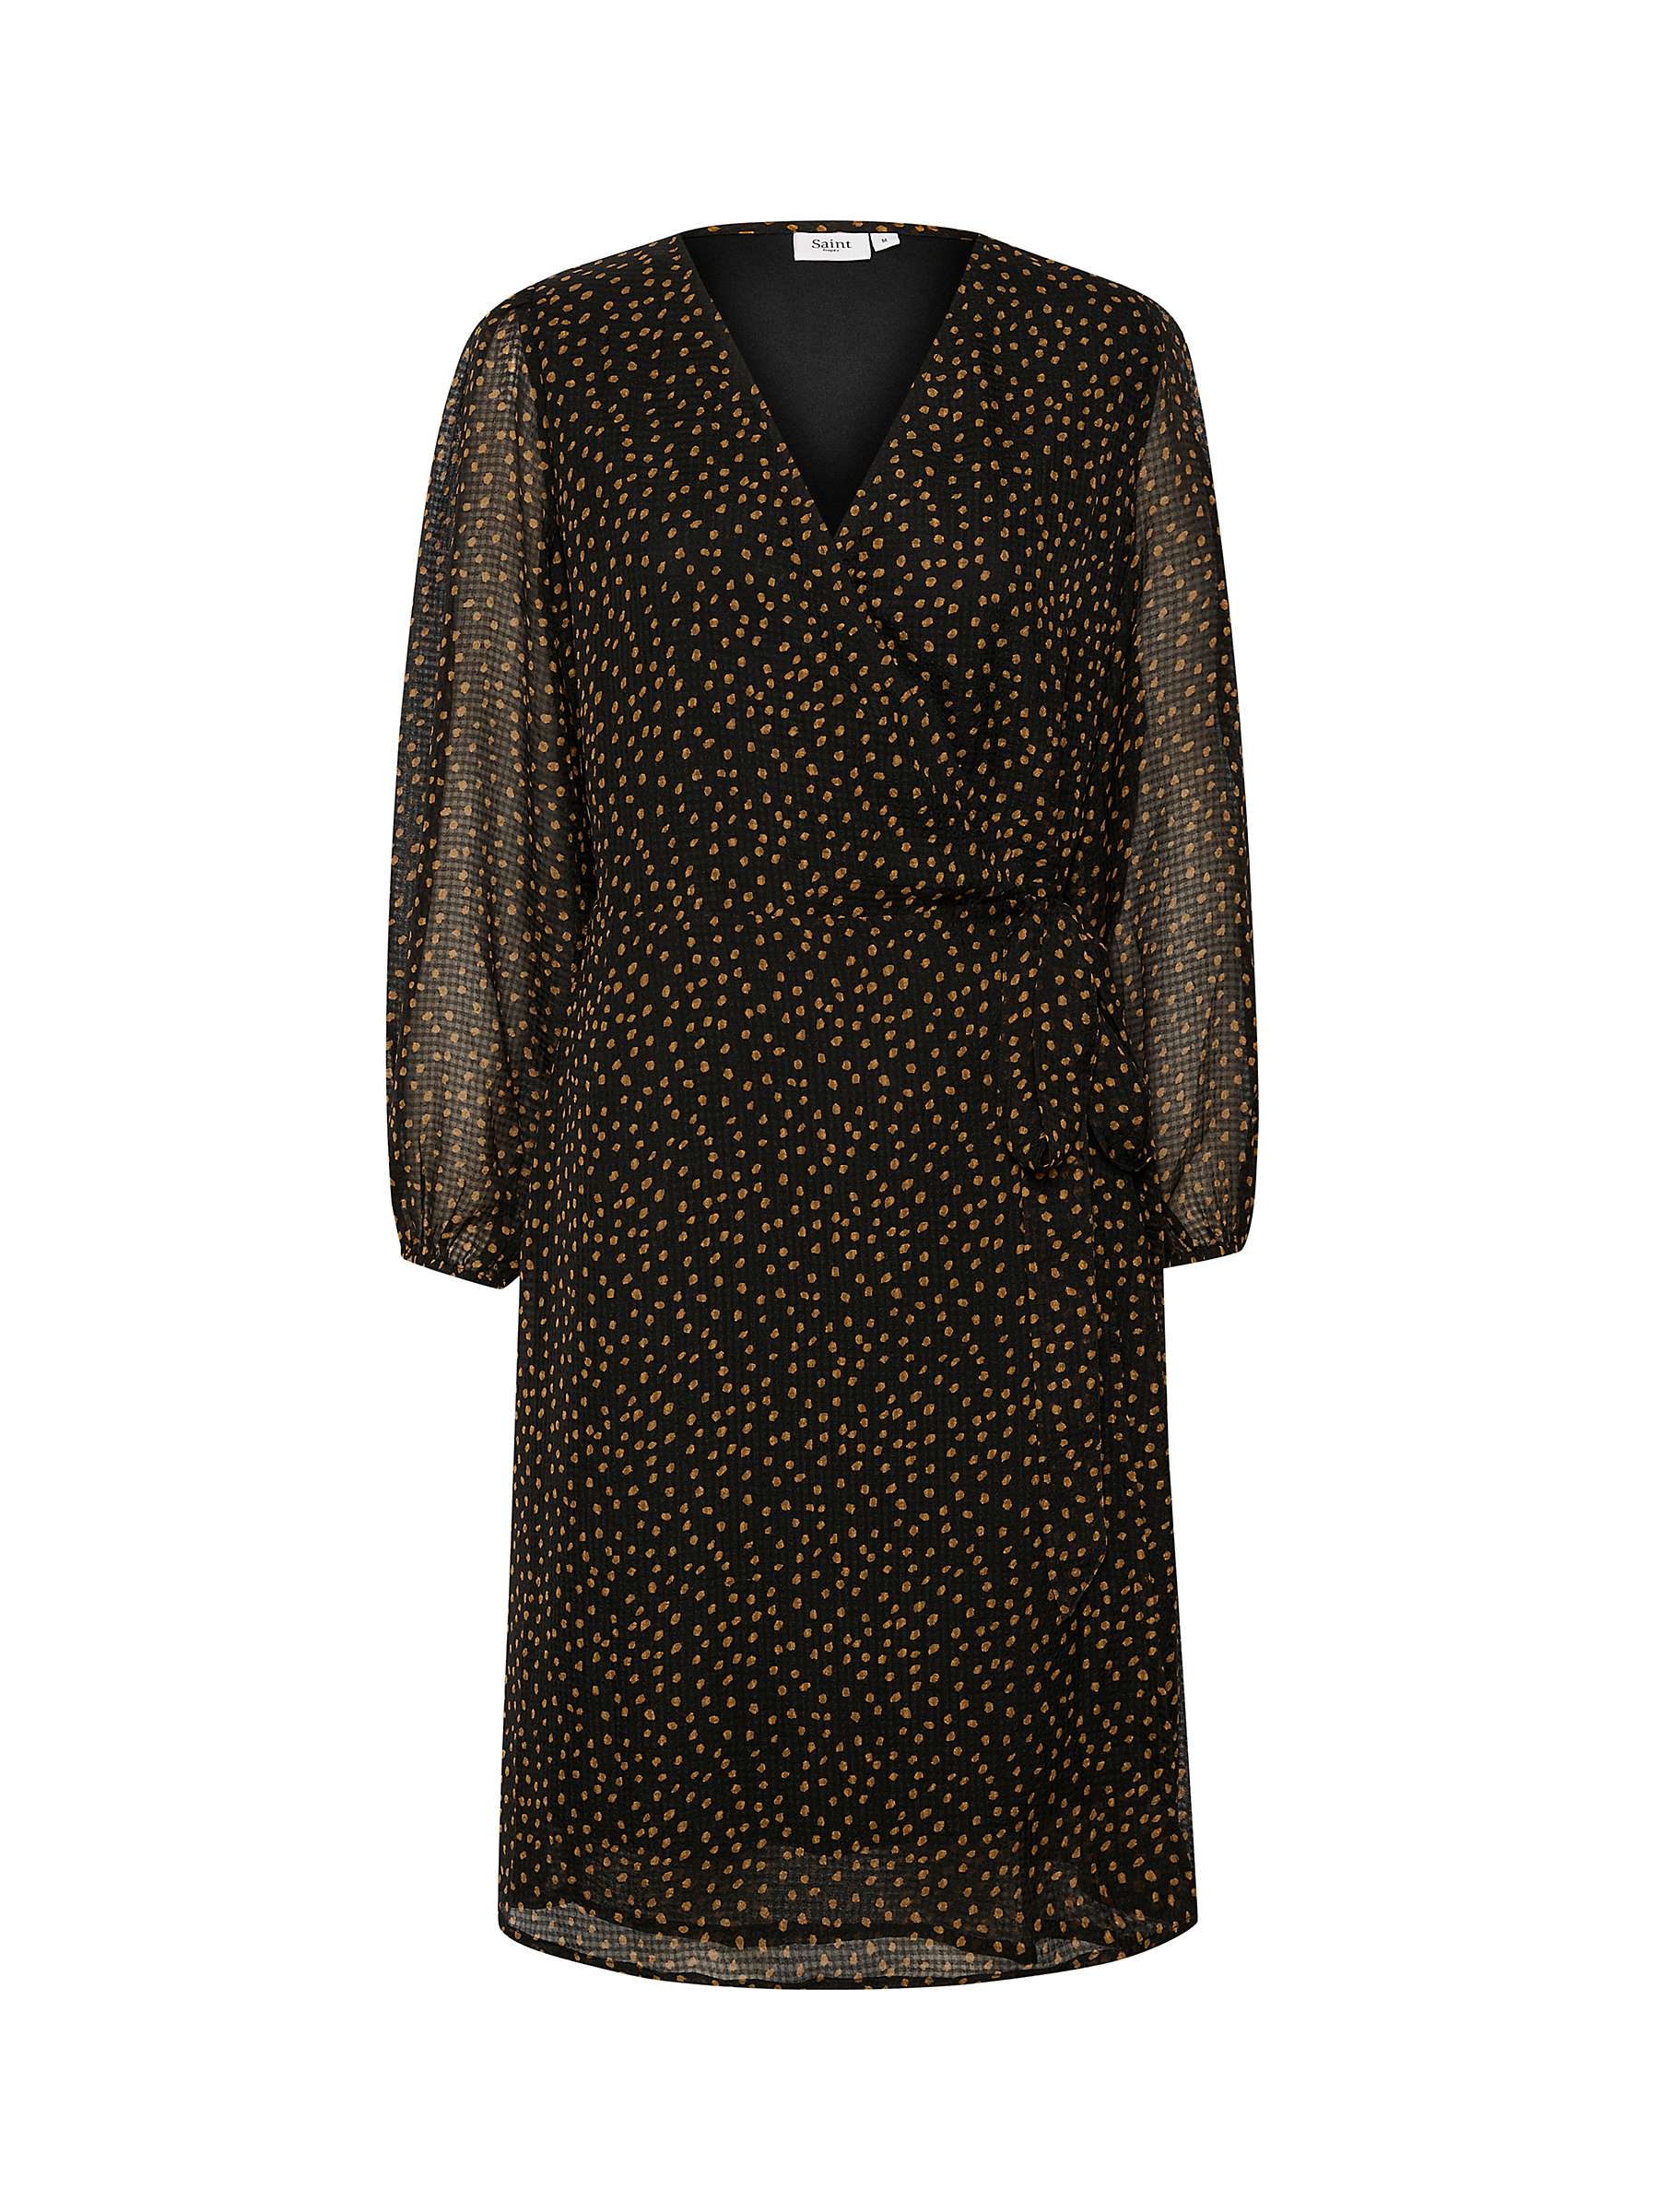 Buy Saint Tropez Lalah Spot Print Chiffon Wrap Dress, Black/Camel Online at johnlewis.com